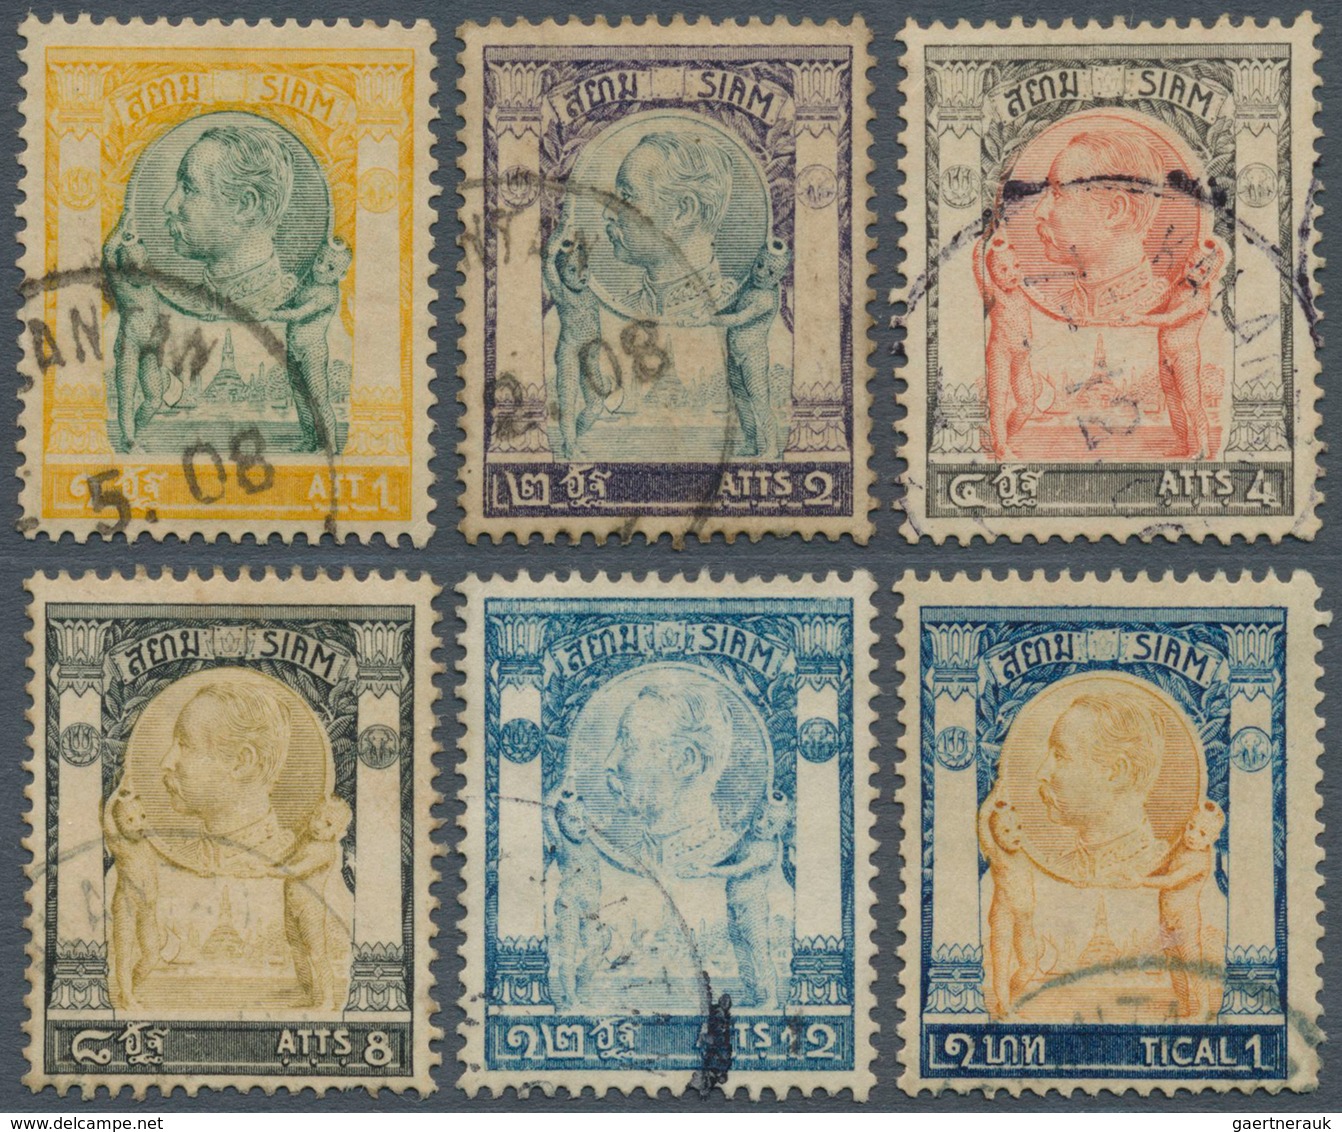 05961 Malaiische Staaten - Kelantan: 1905-1909: Short Set Of Six SIAM 'Temple Of Light' Stamps Used At Kot - Kelantan